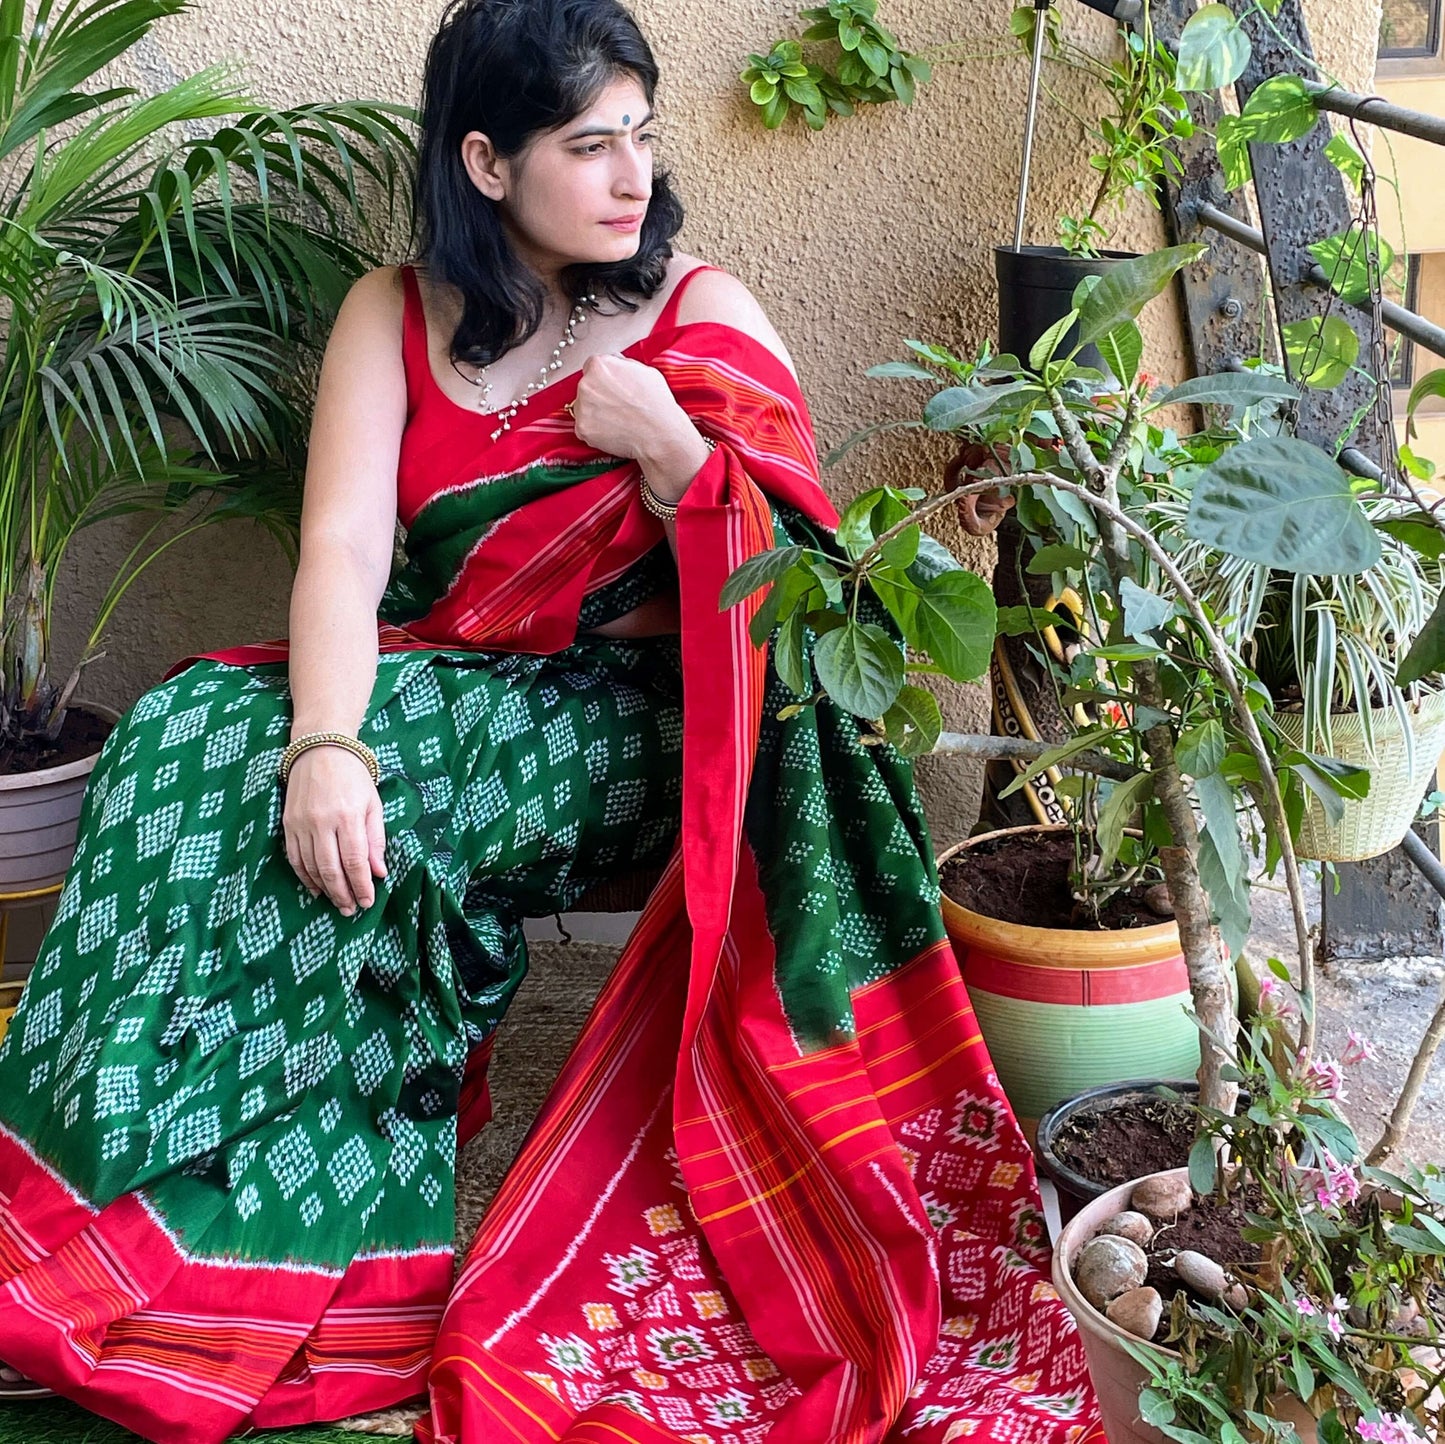 Green Pochampally Ikat Silk Saree